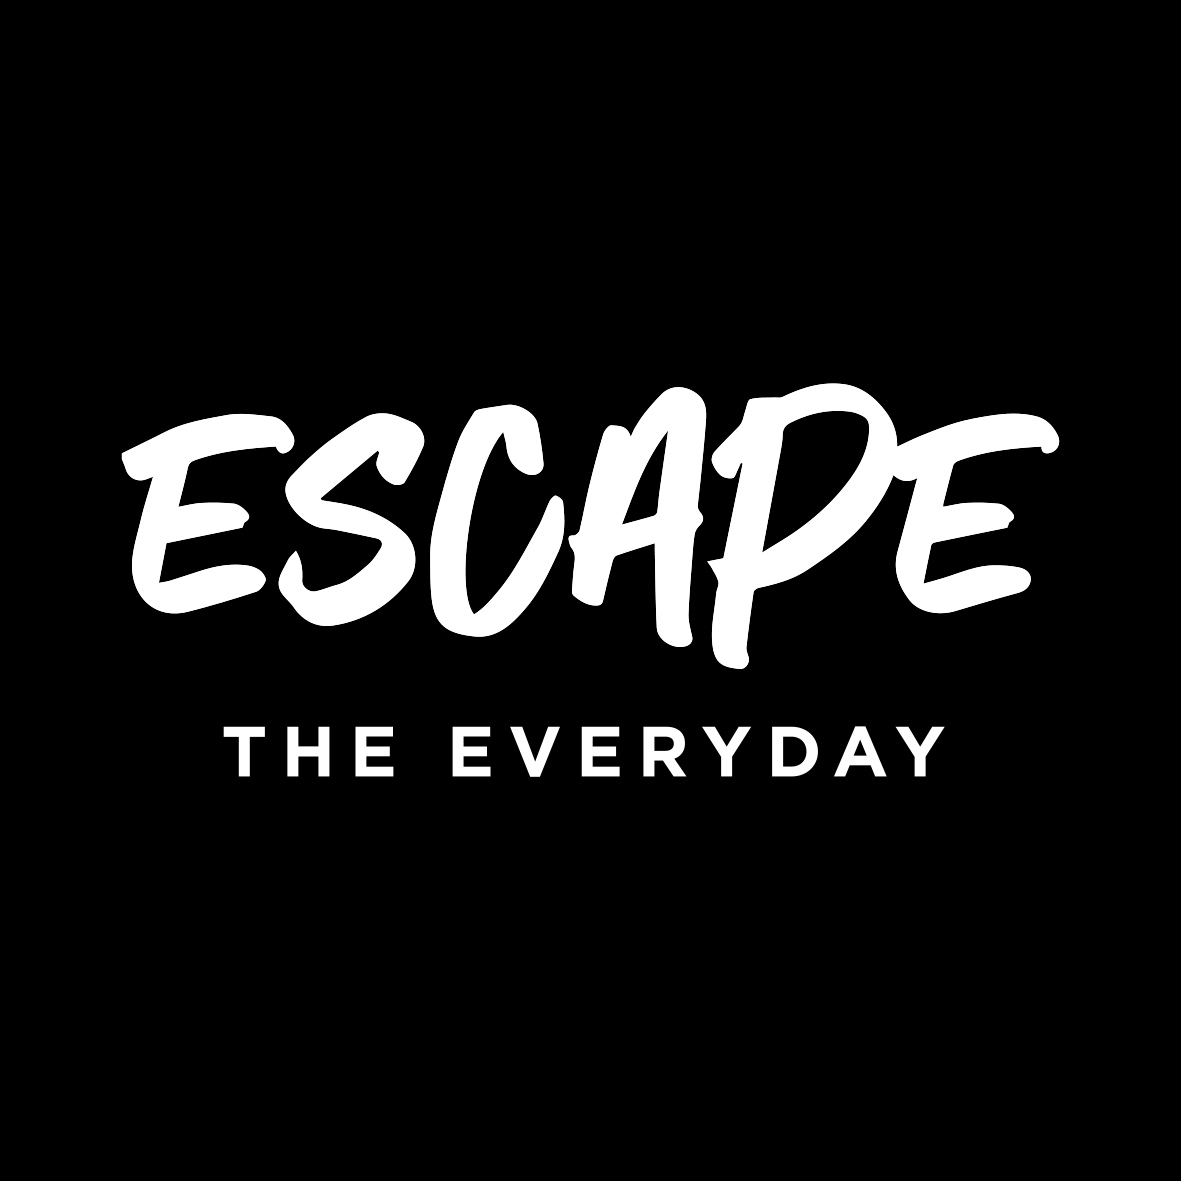 #EscapeTheEveryday